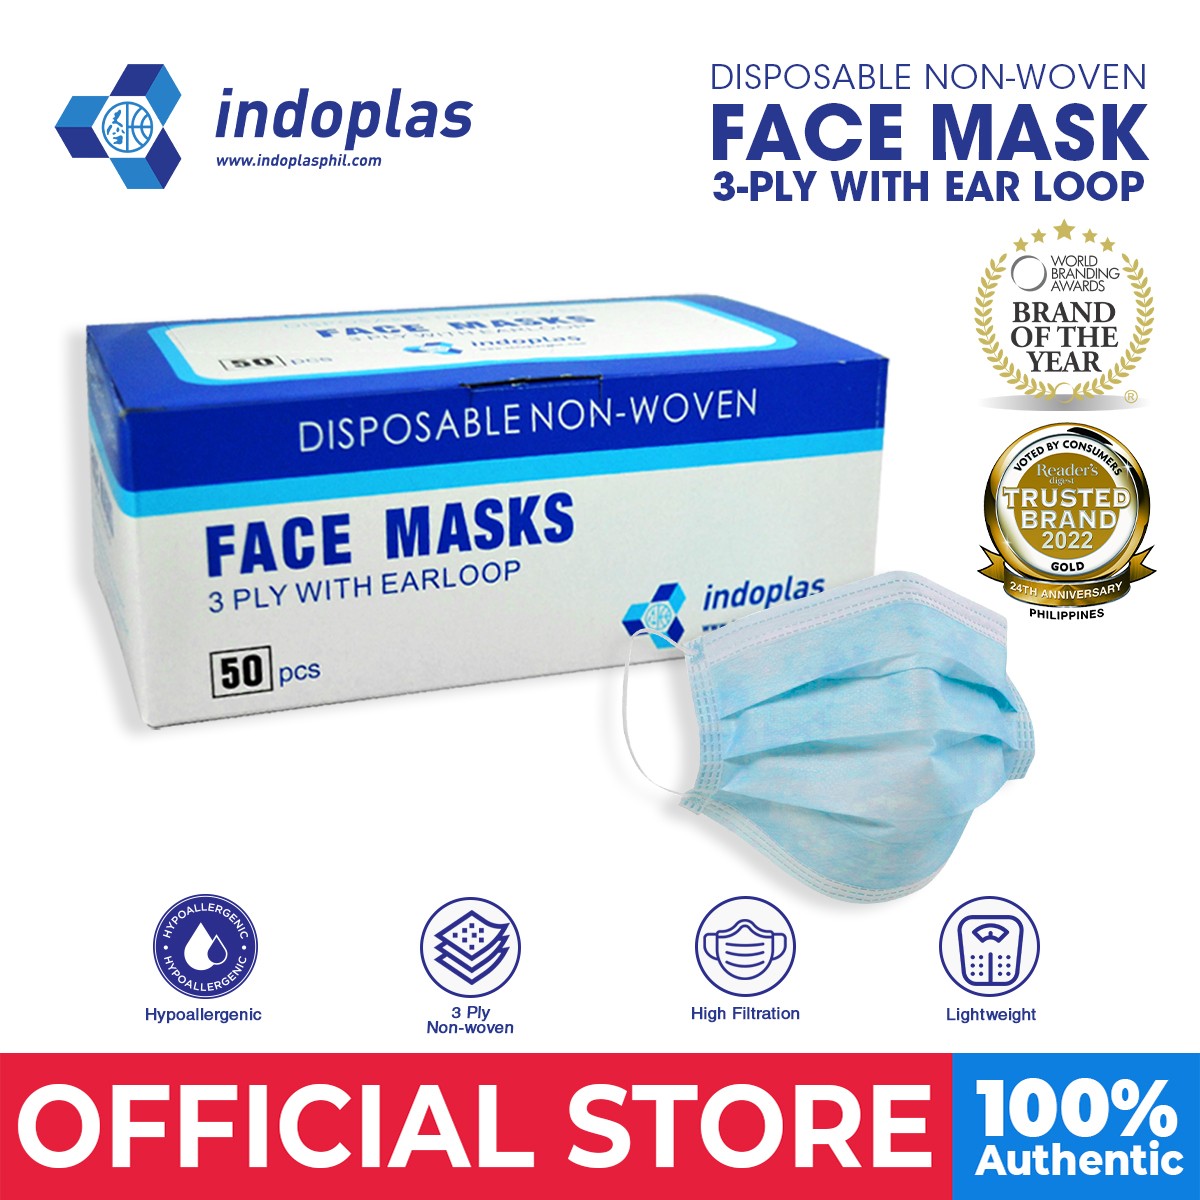 Buy Daiso Face Mask online